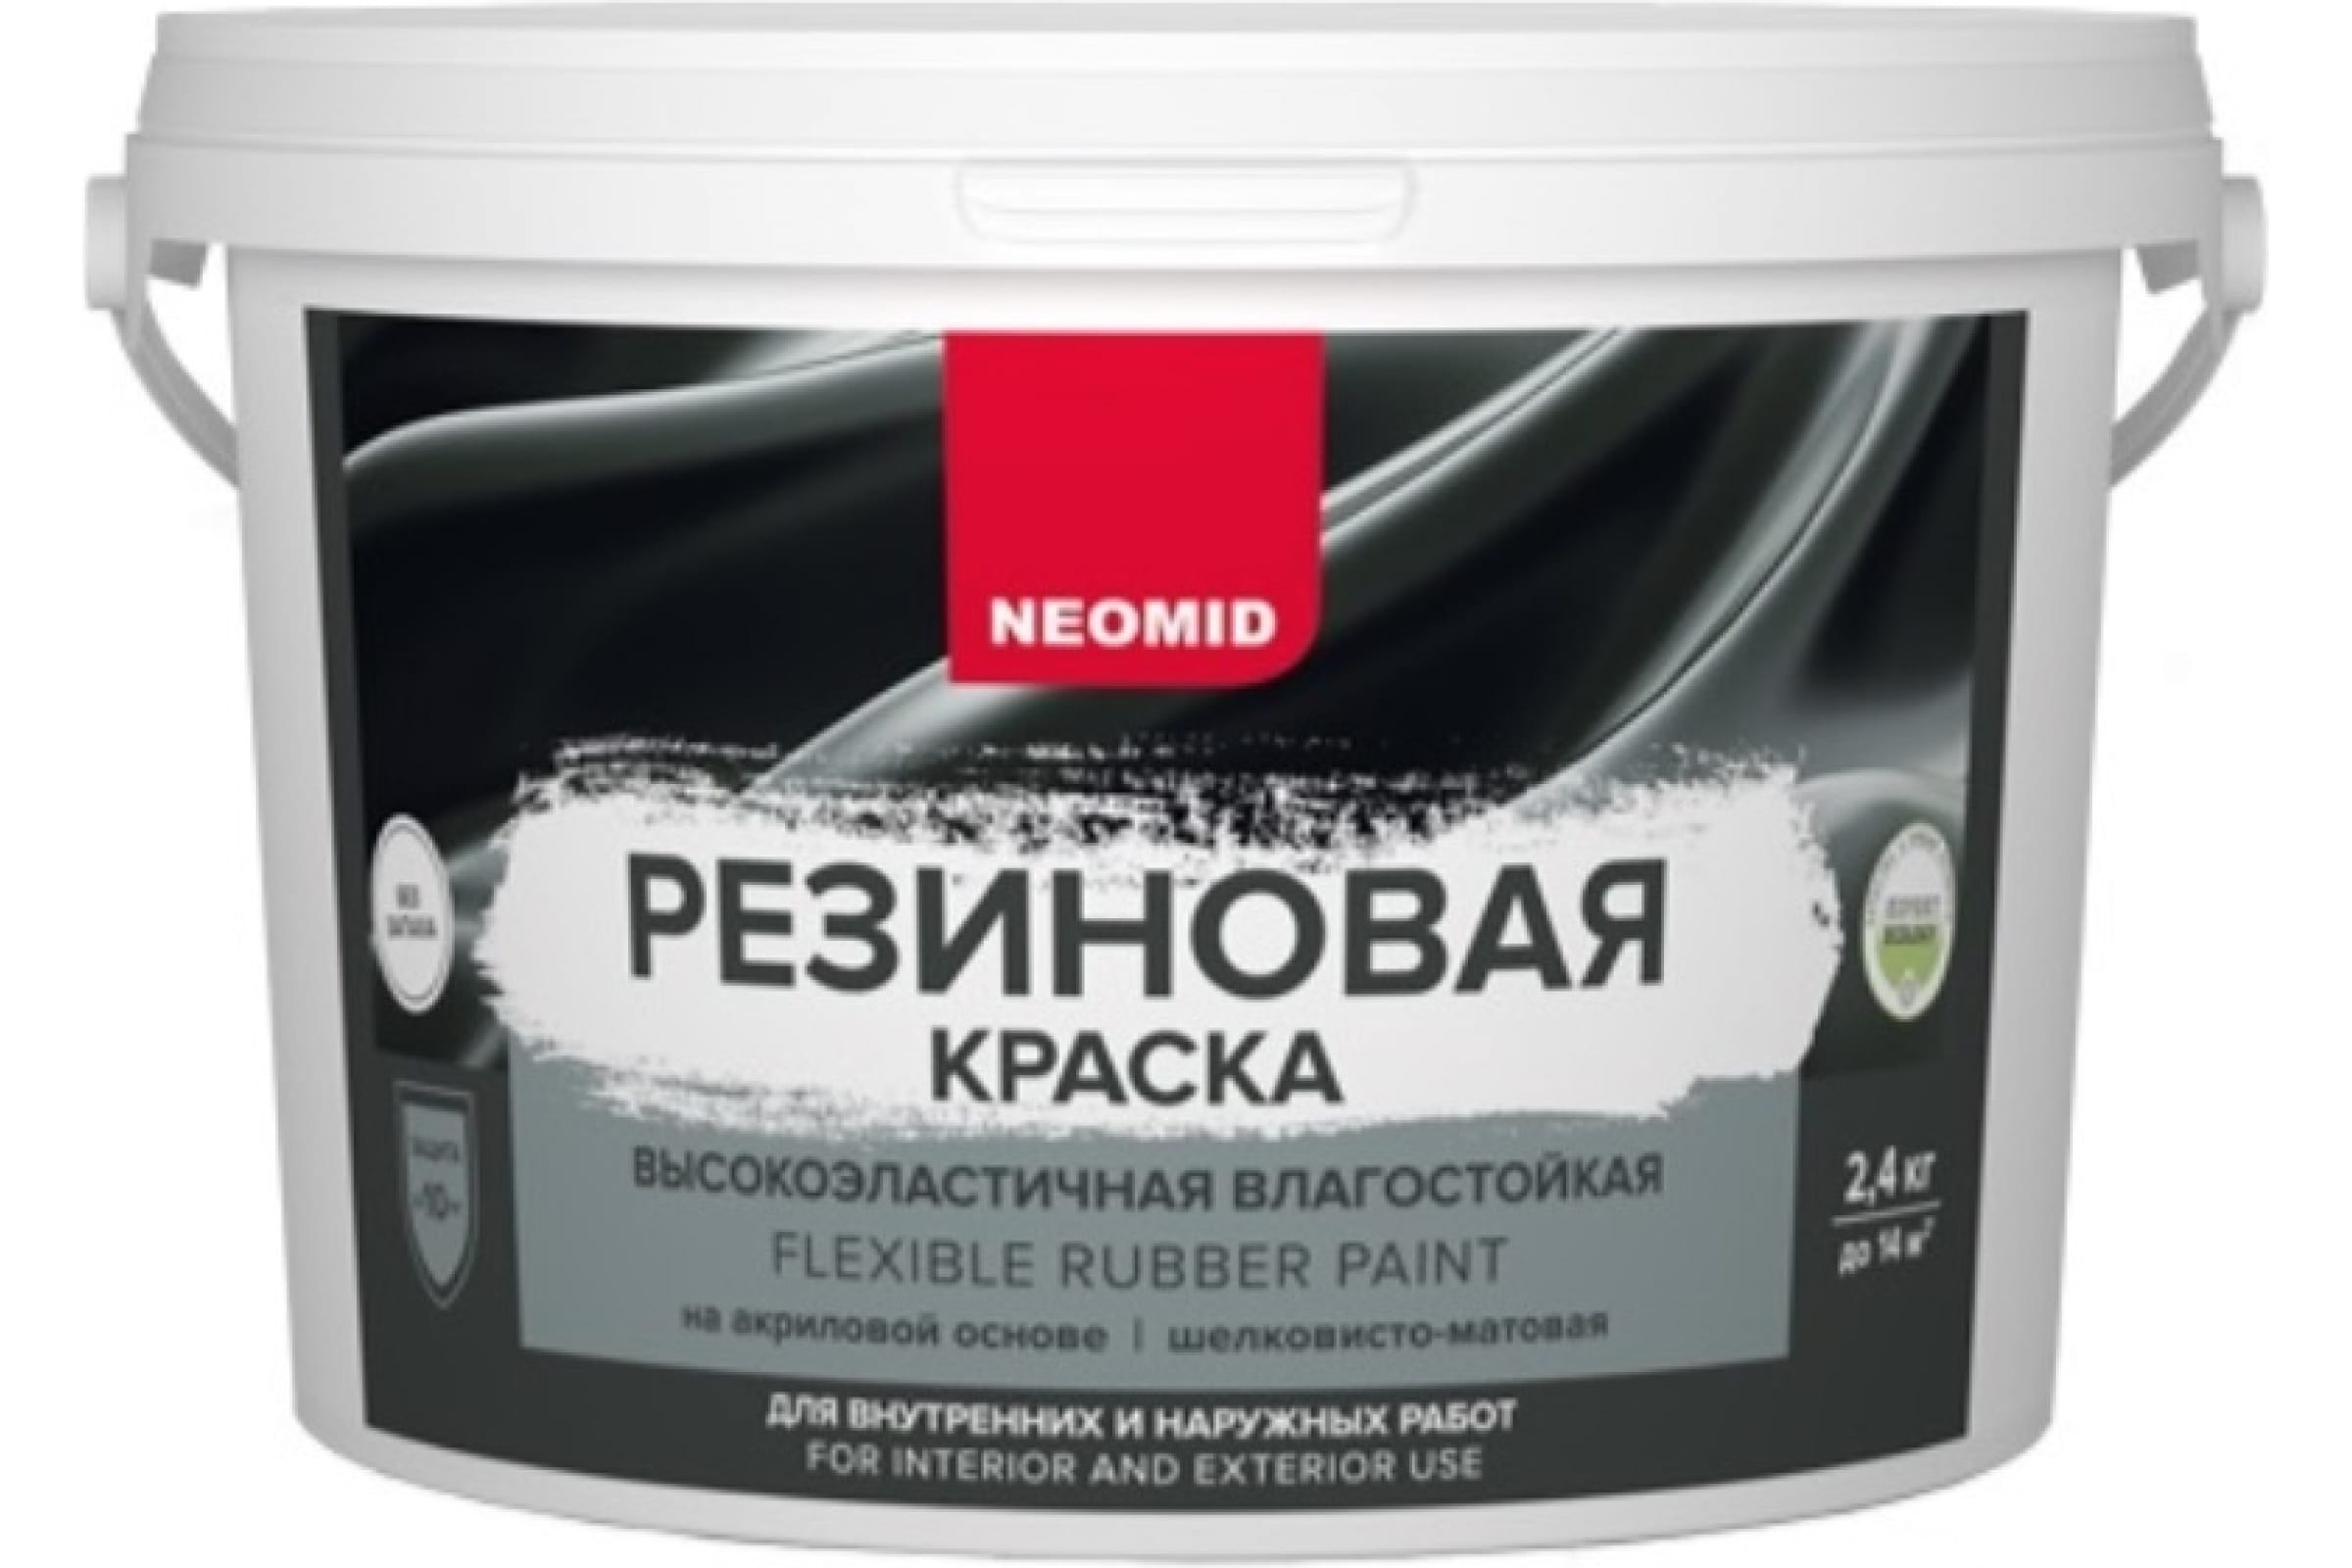 Neomid Краска резиновая Темный шоколад 2,4 кг Н-КраскаРез-2,4-ТемШок